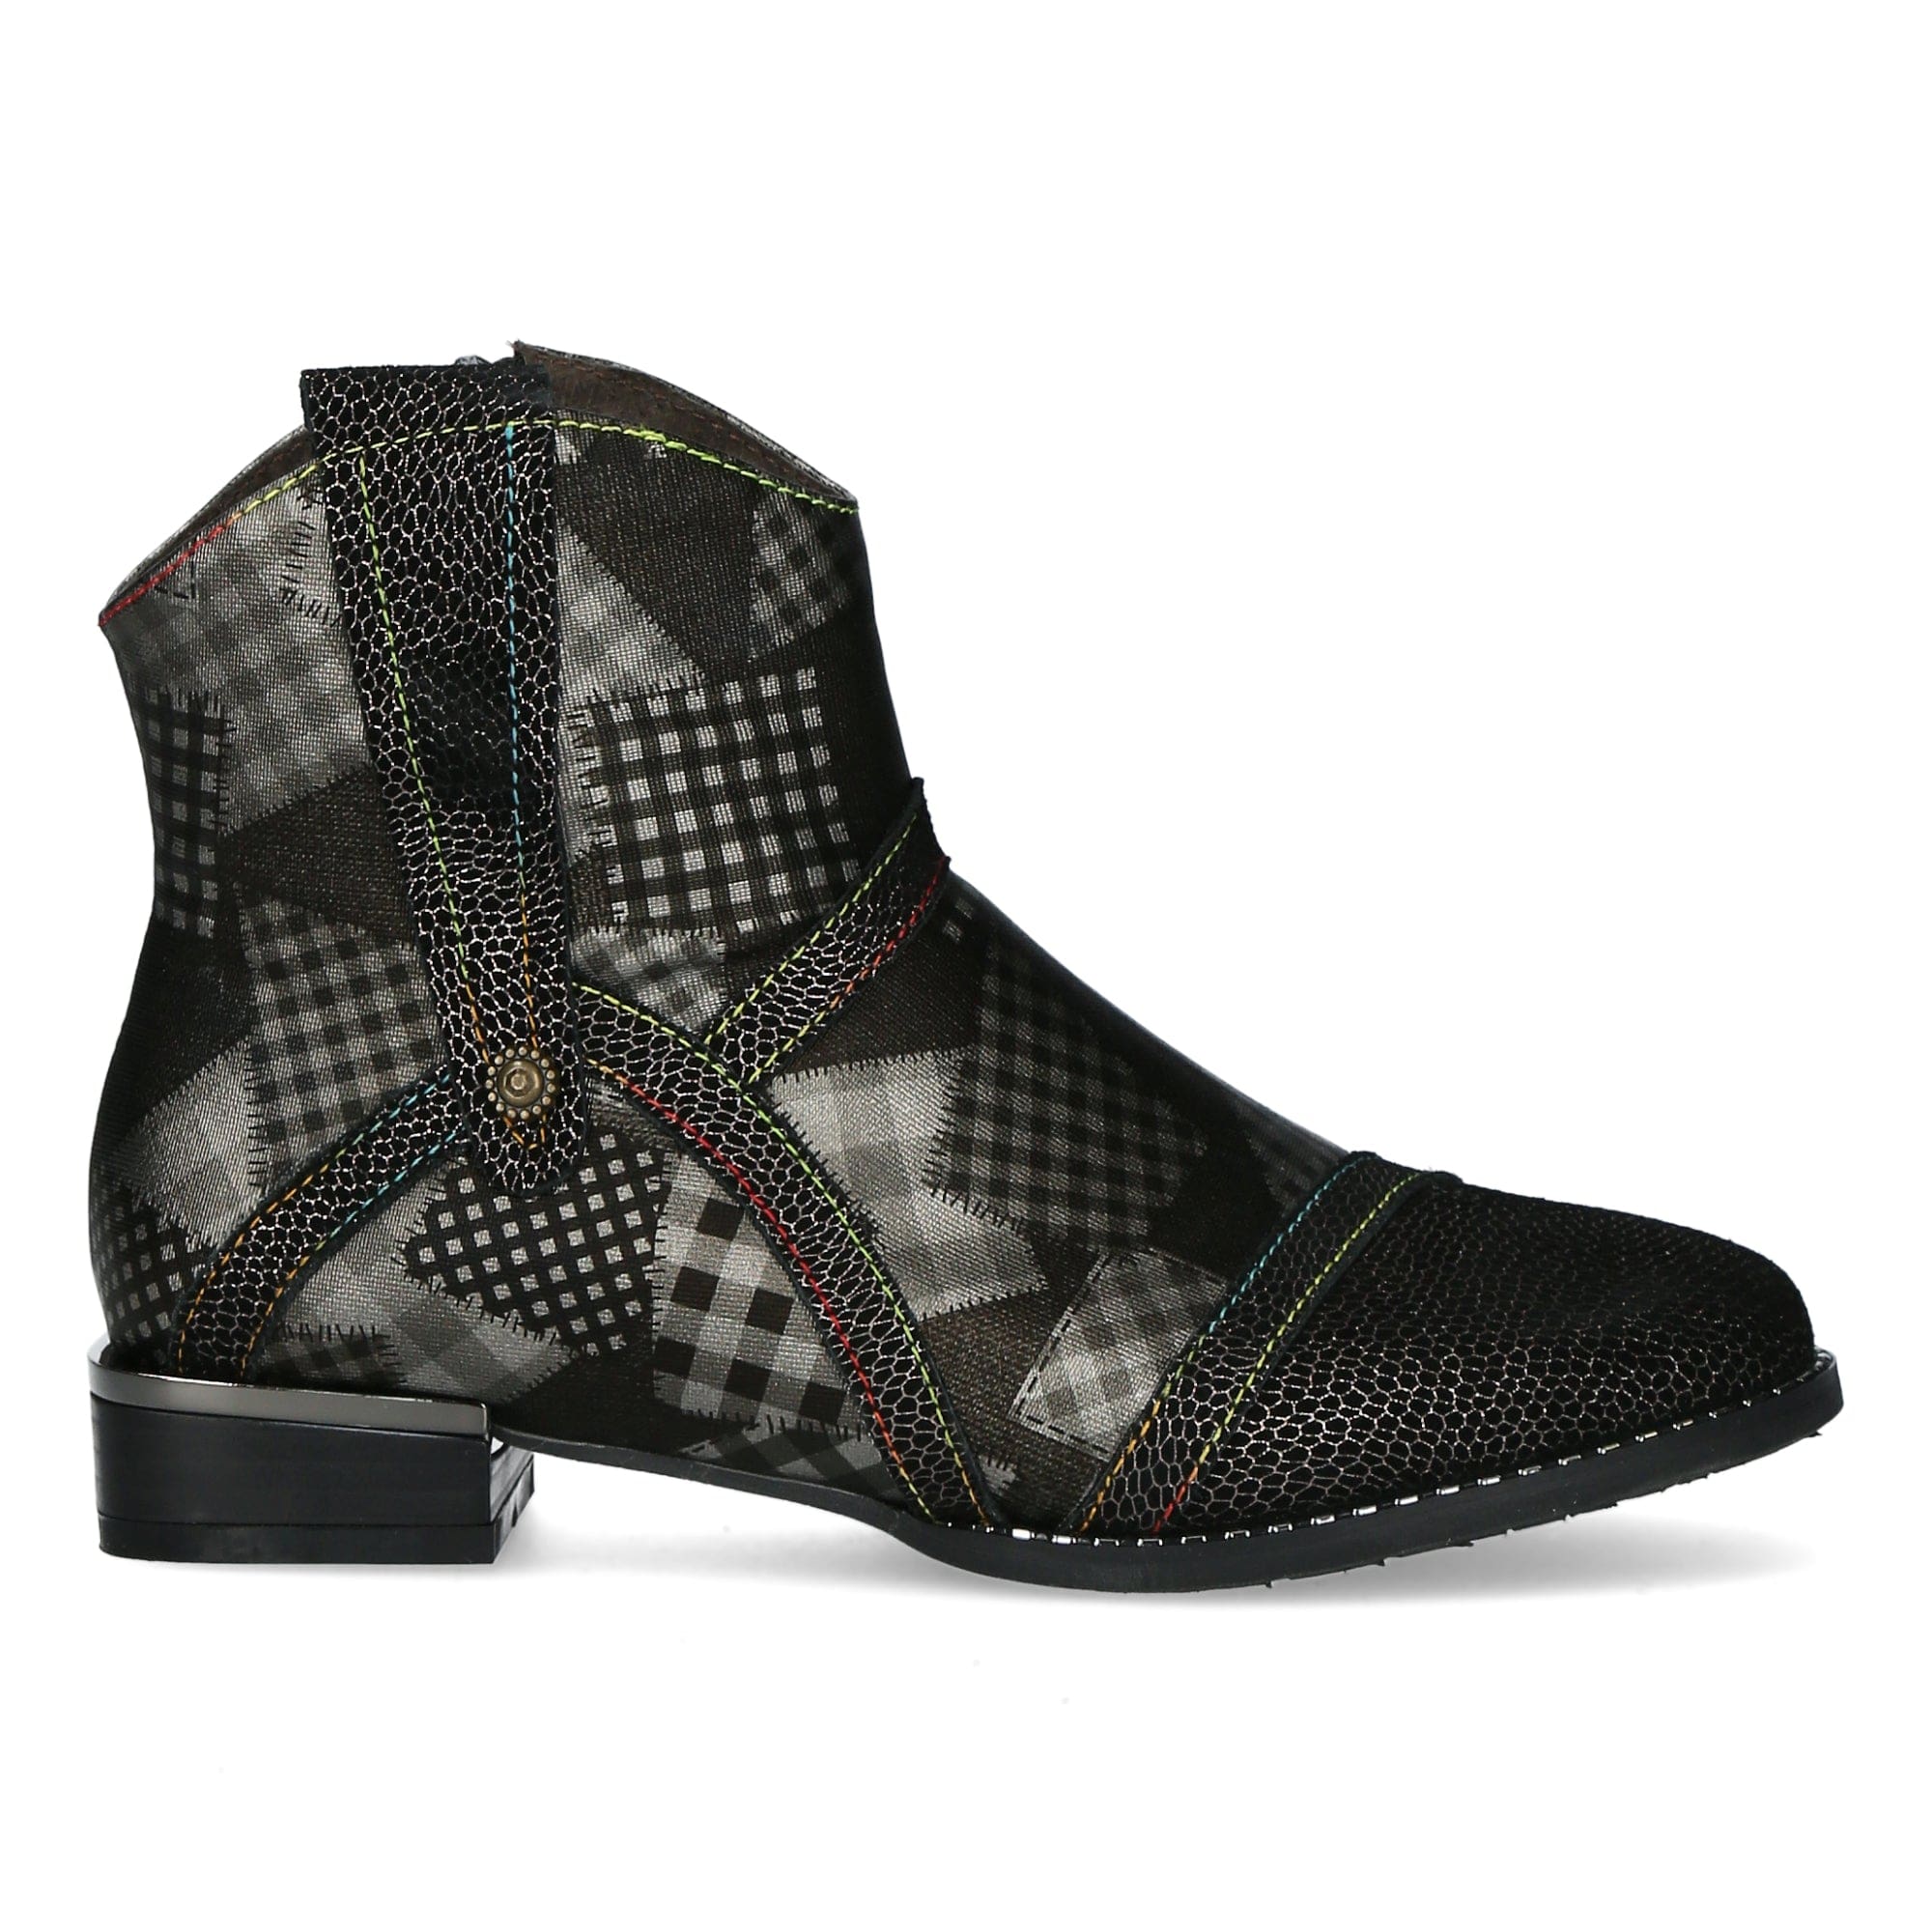 Chaussure IBCALONO01 - 35 / Noir - Boots